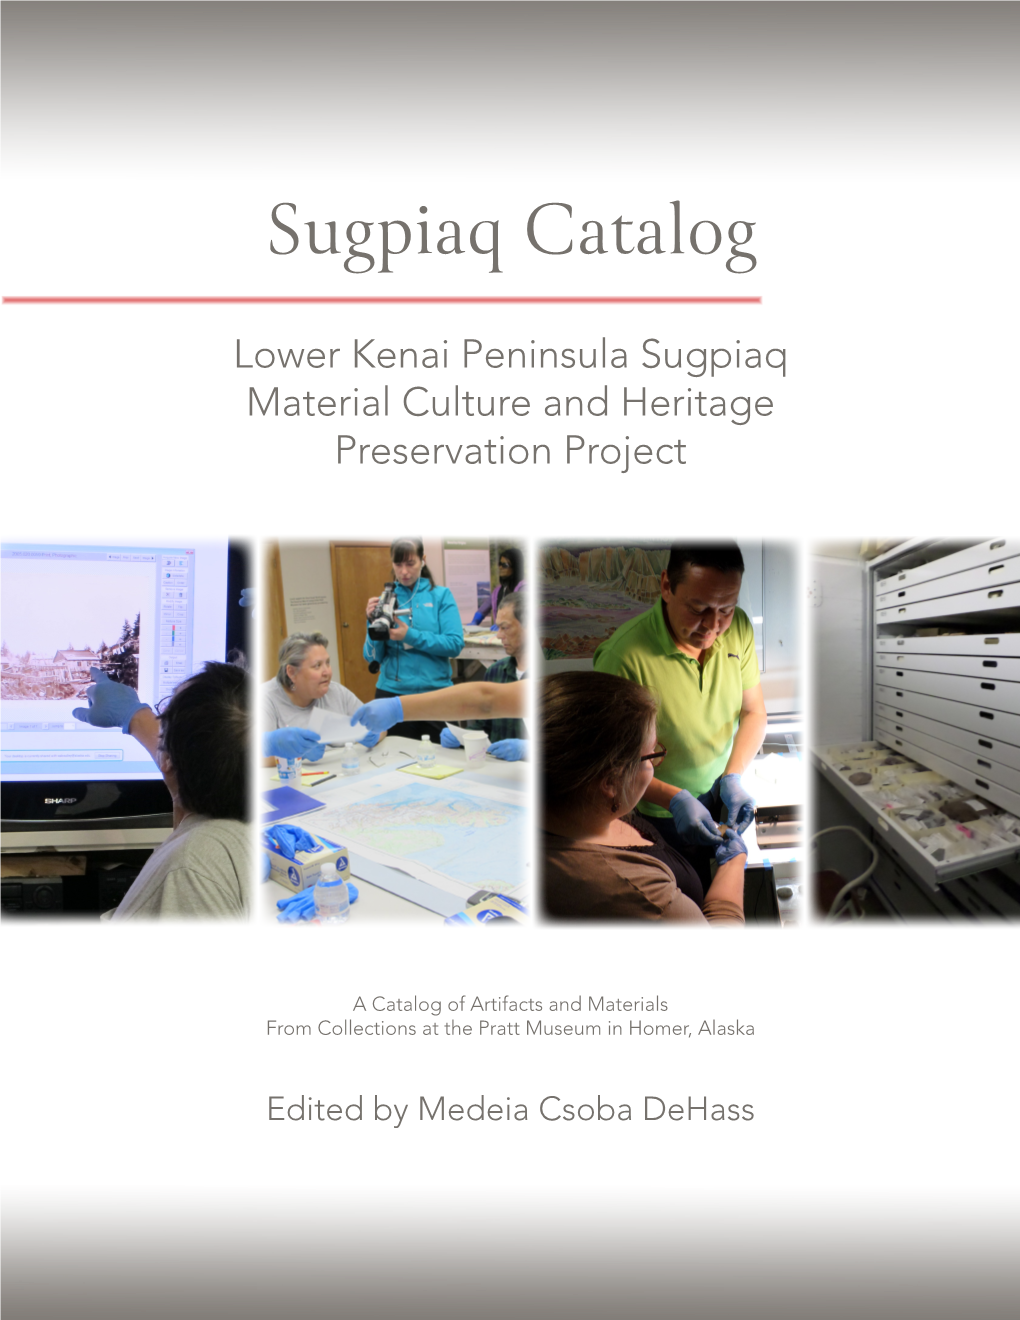 Lower Kenai Peninsula Sugpiaq Catalog